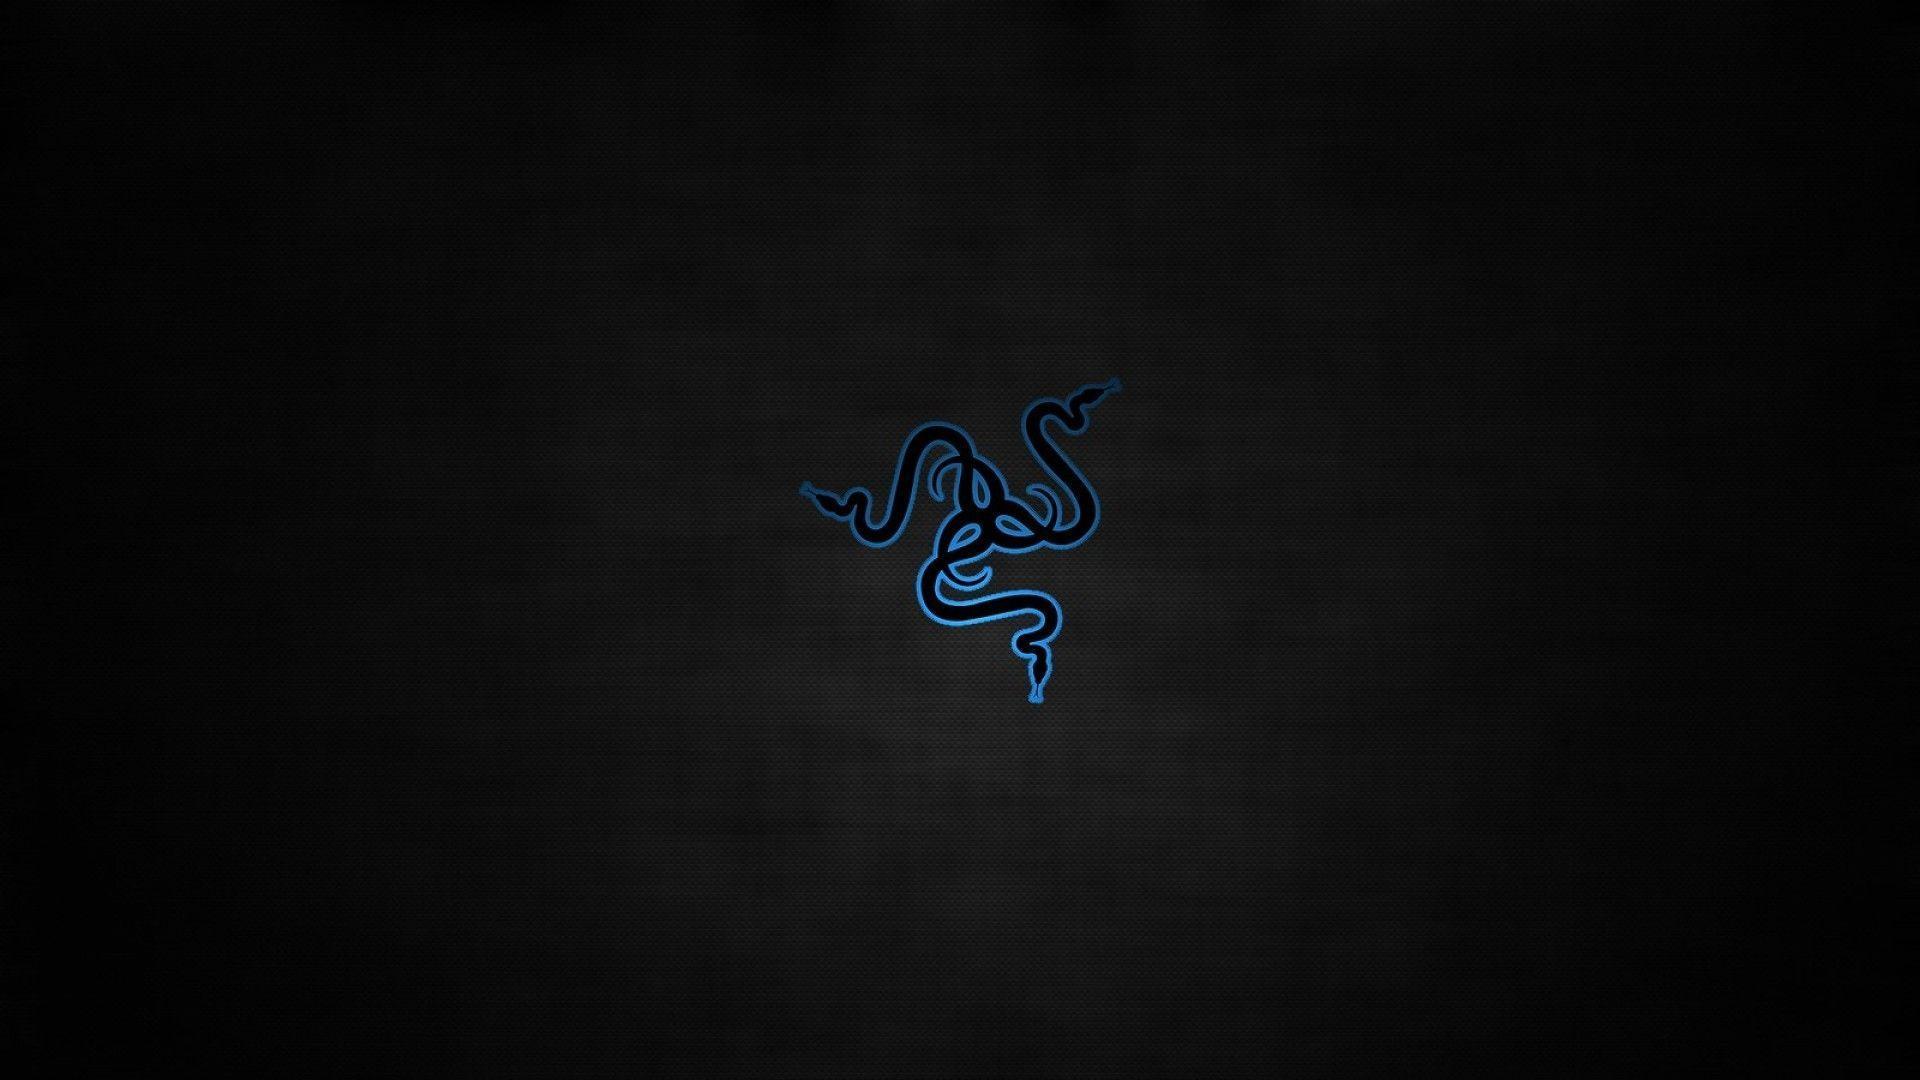 Razer Blue Wallpaper And Background Image